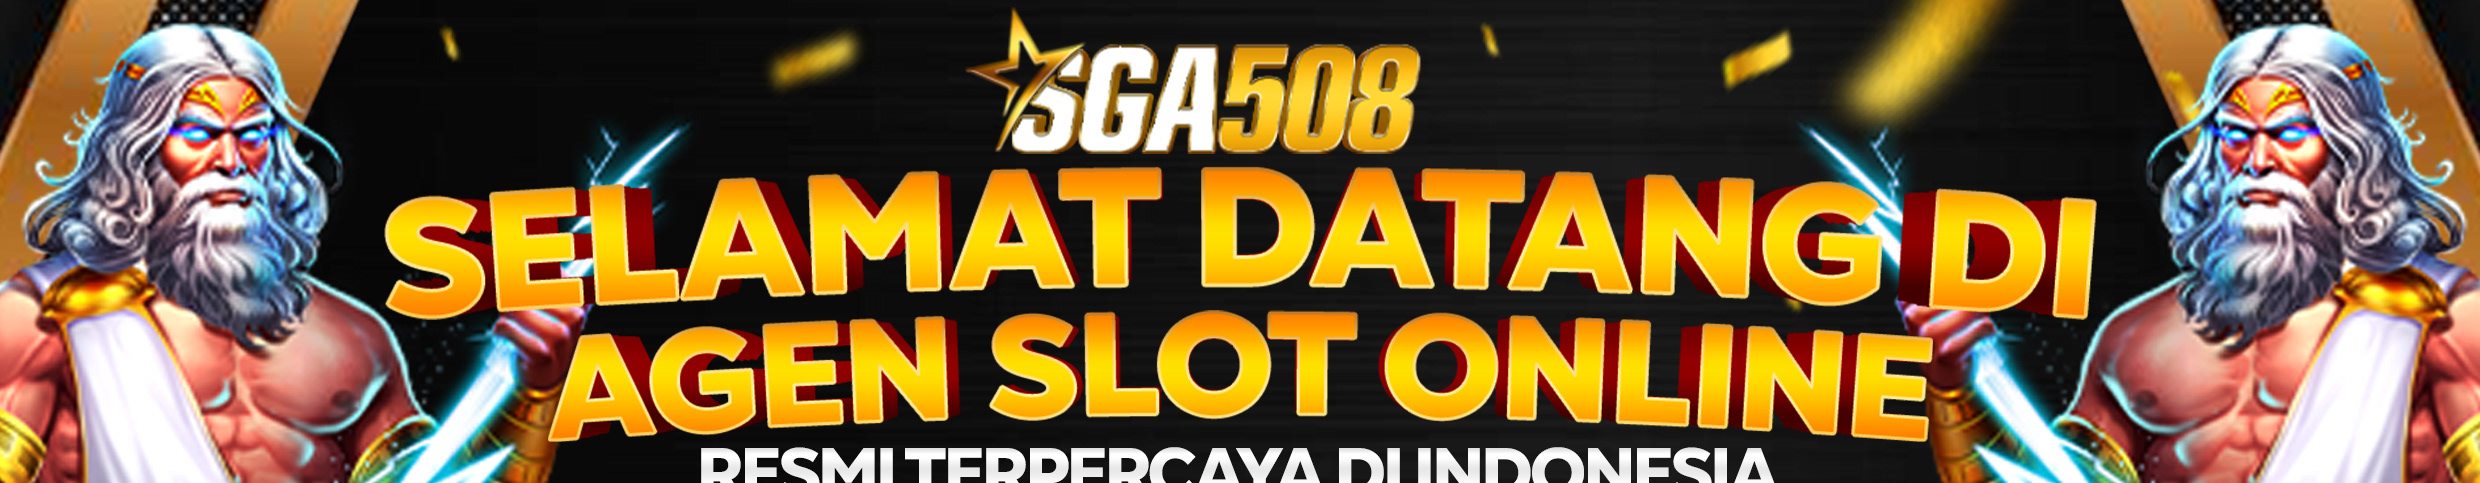 Profielbanner van SGA508 Slot Gacor